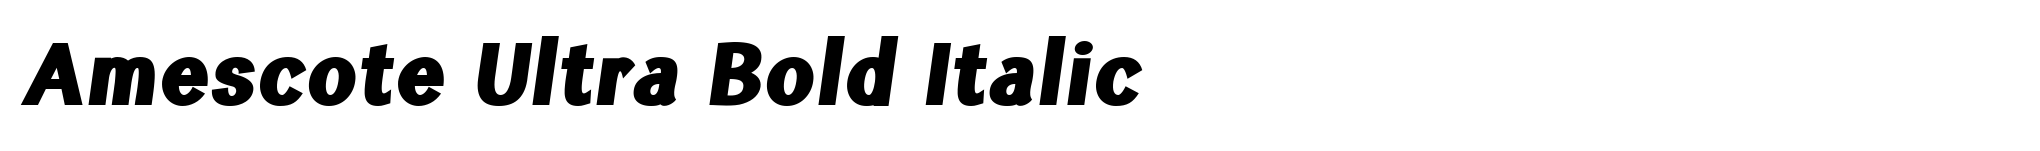 Amescote Ultra Bold Italic image